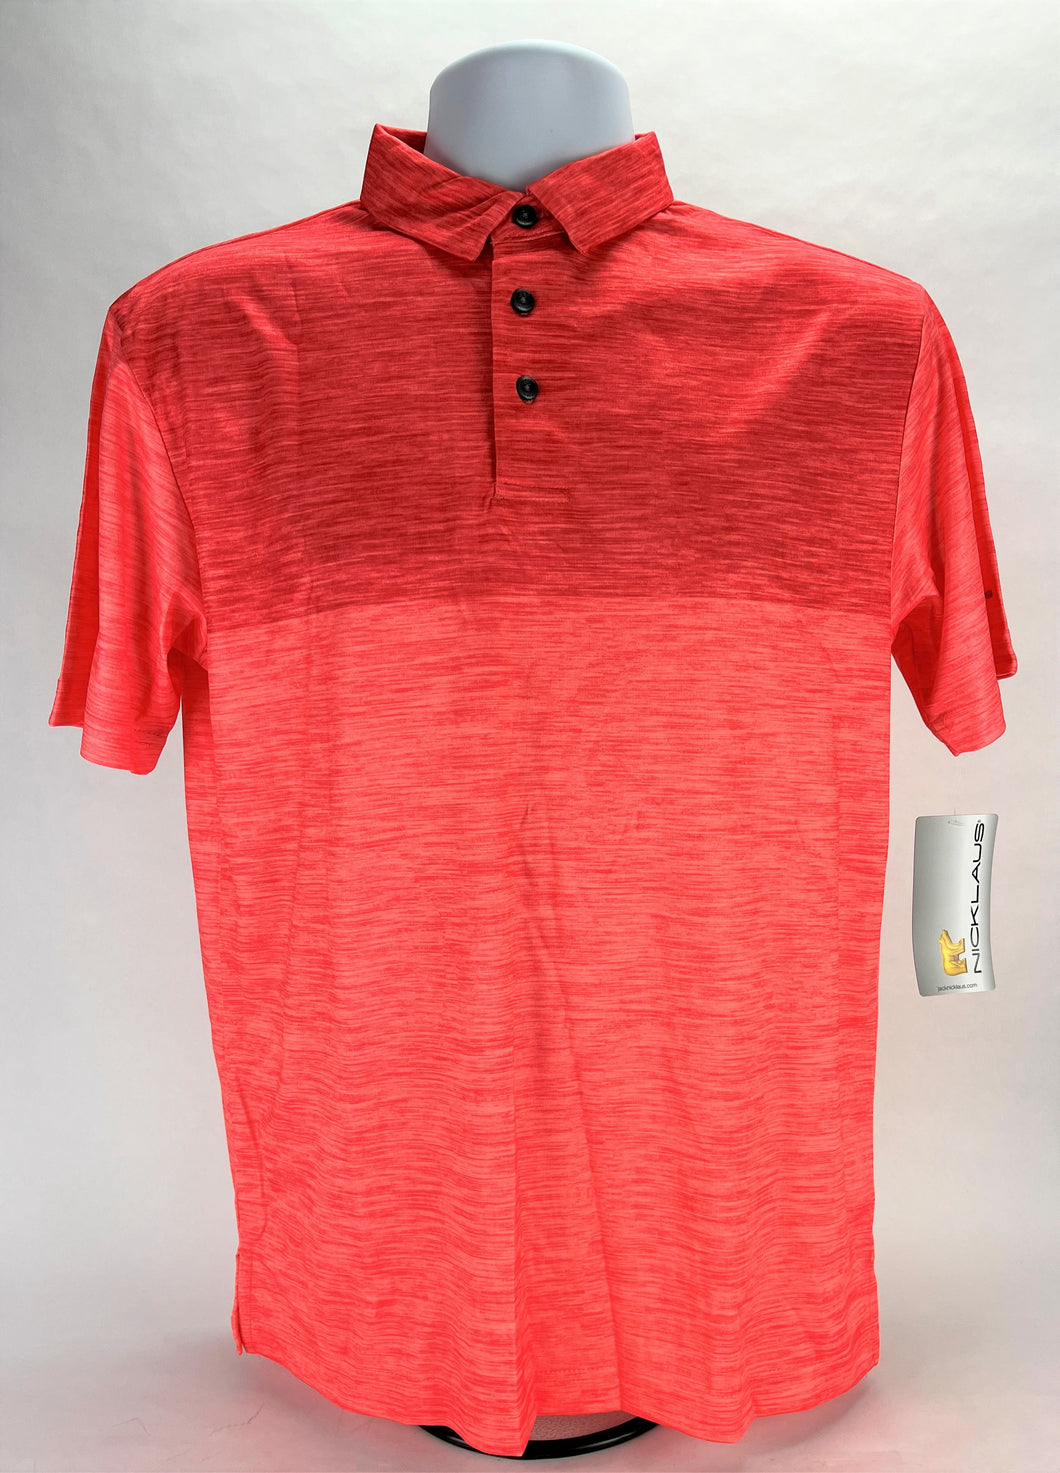 Jack Nicklaus Men's Color Block Golf Polo, StayDri Fabric, Orange, X-Small